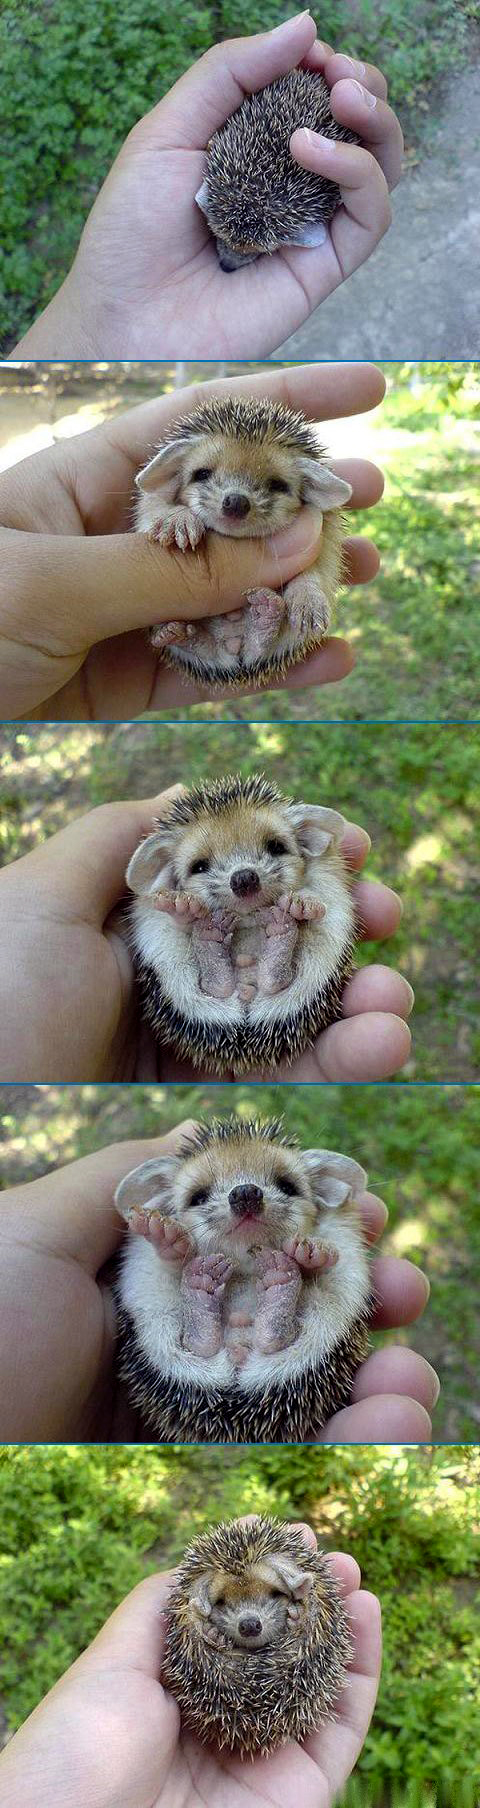 baby-hedgehog-i1.jpg